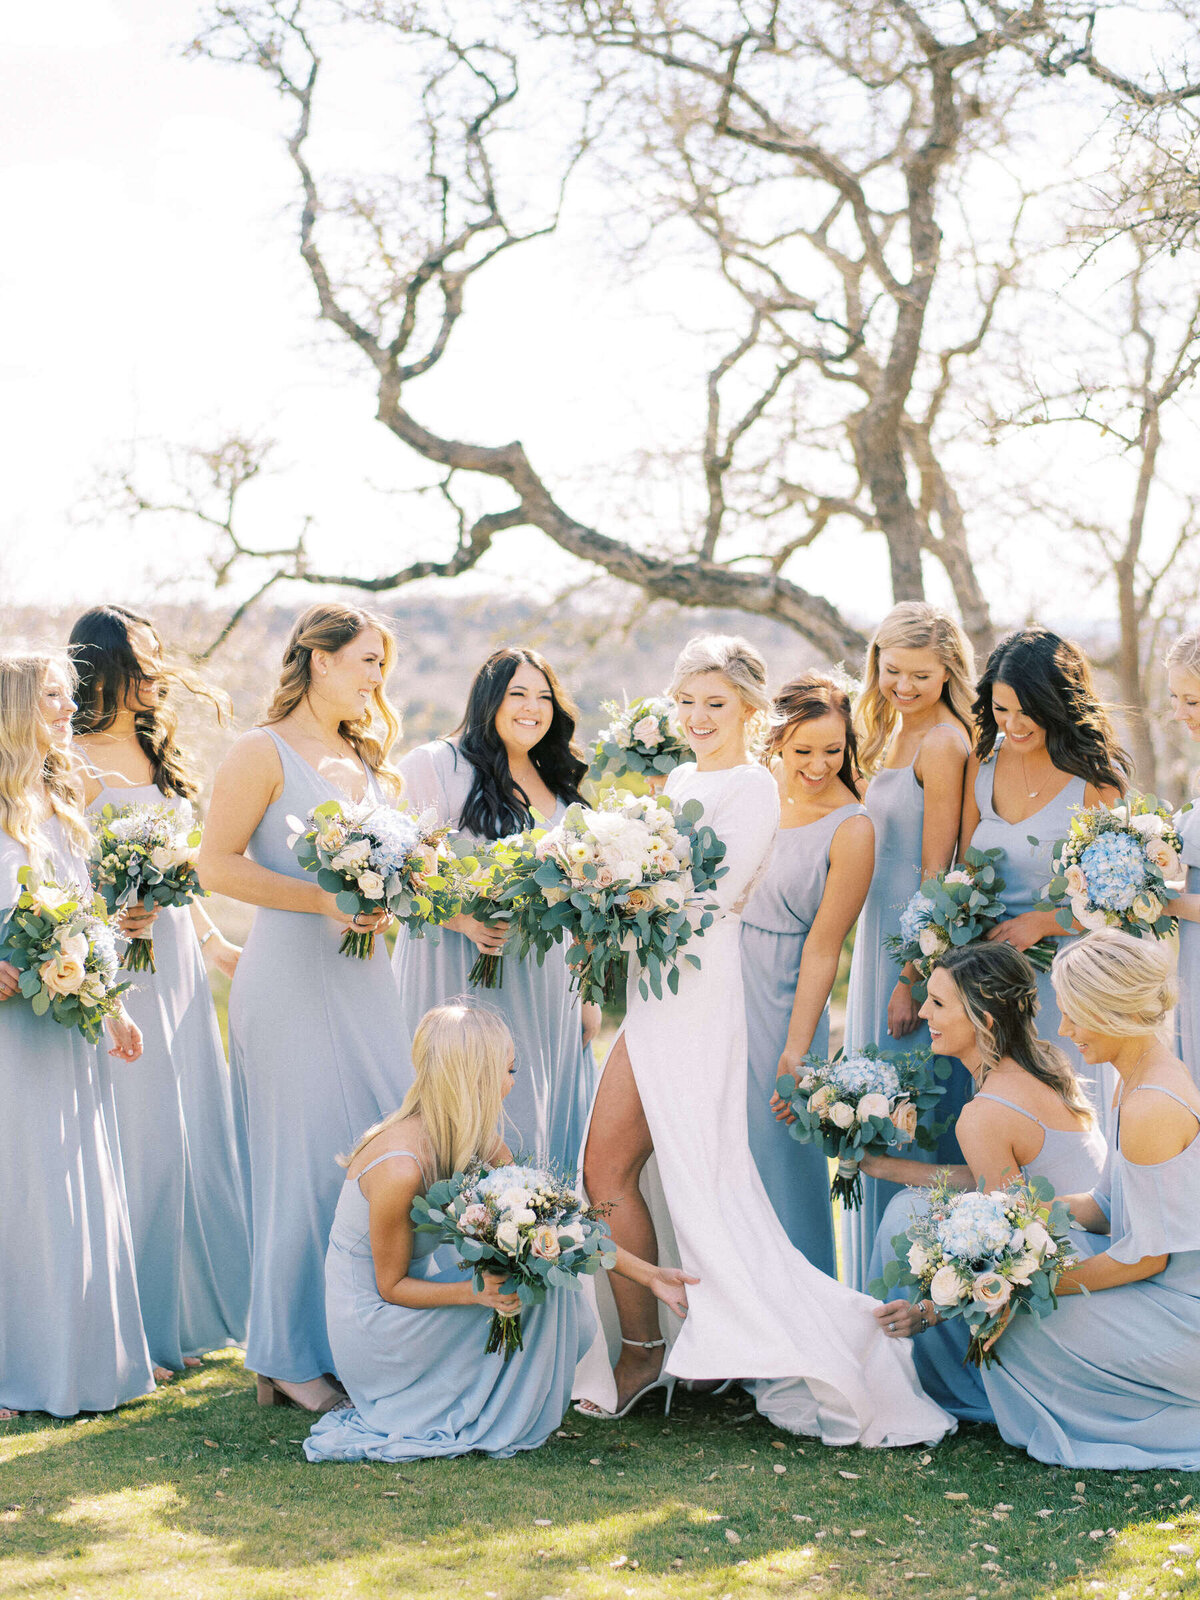 Bridesmaids help adjust young bride's dress for Texas wedding